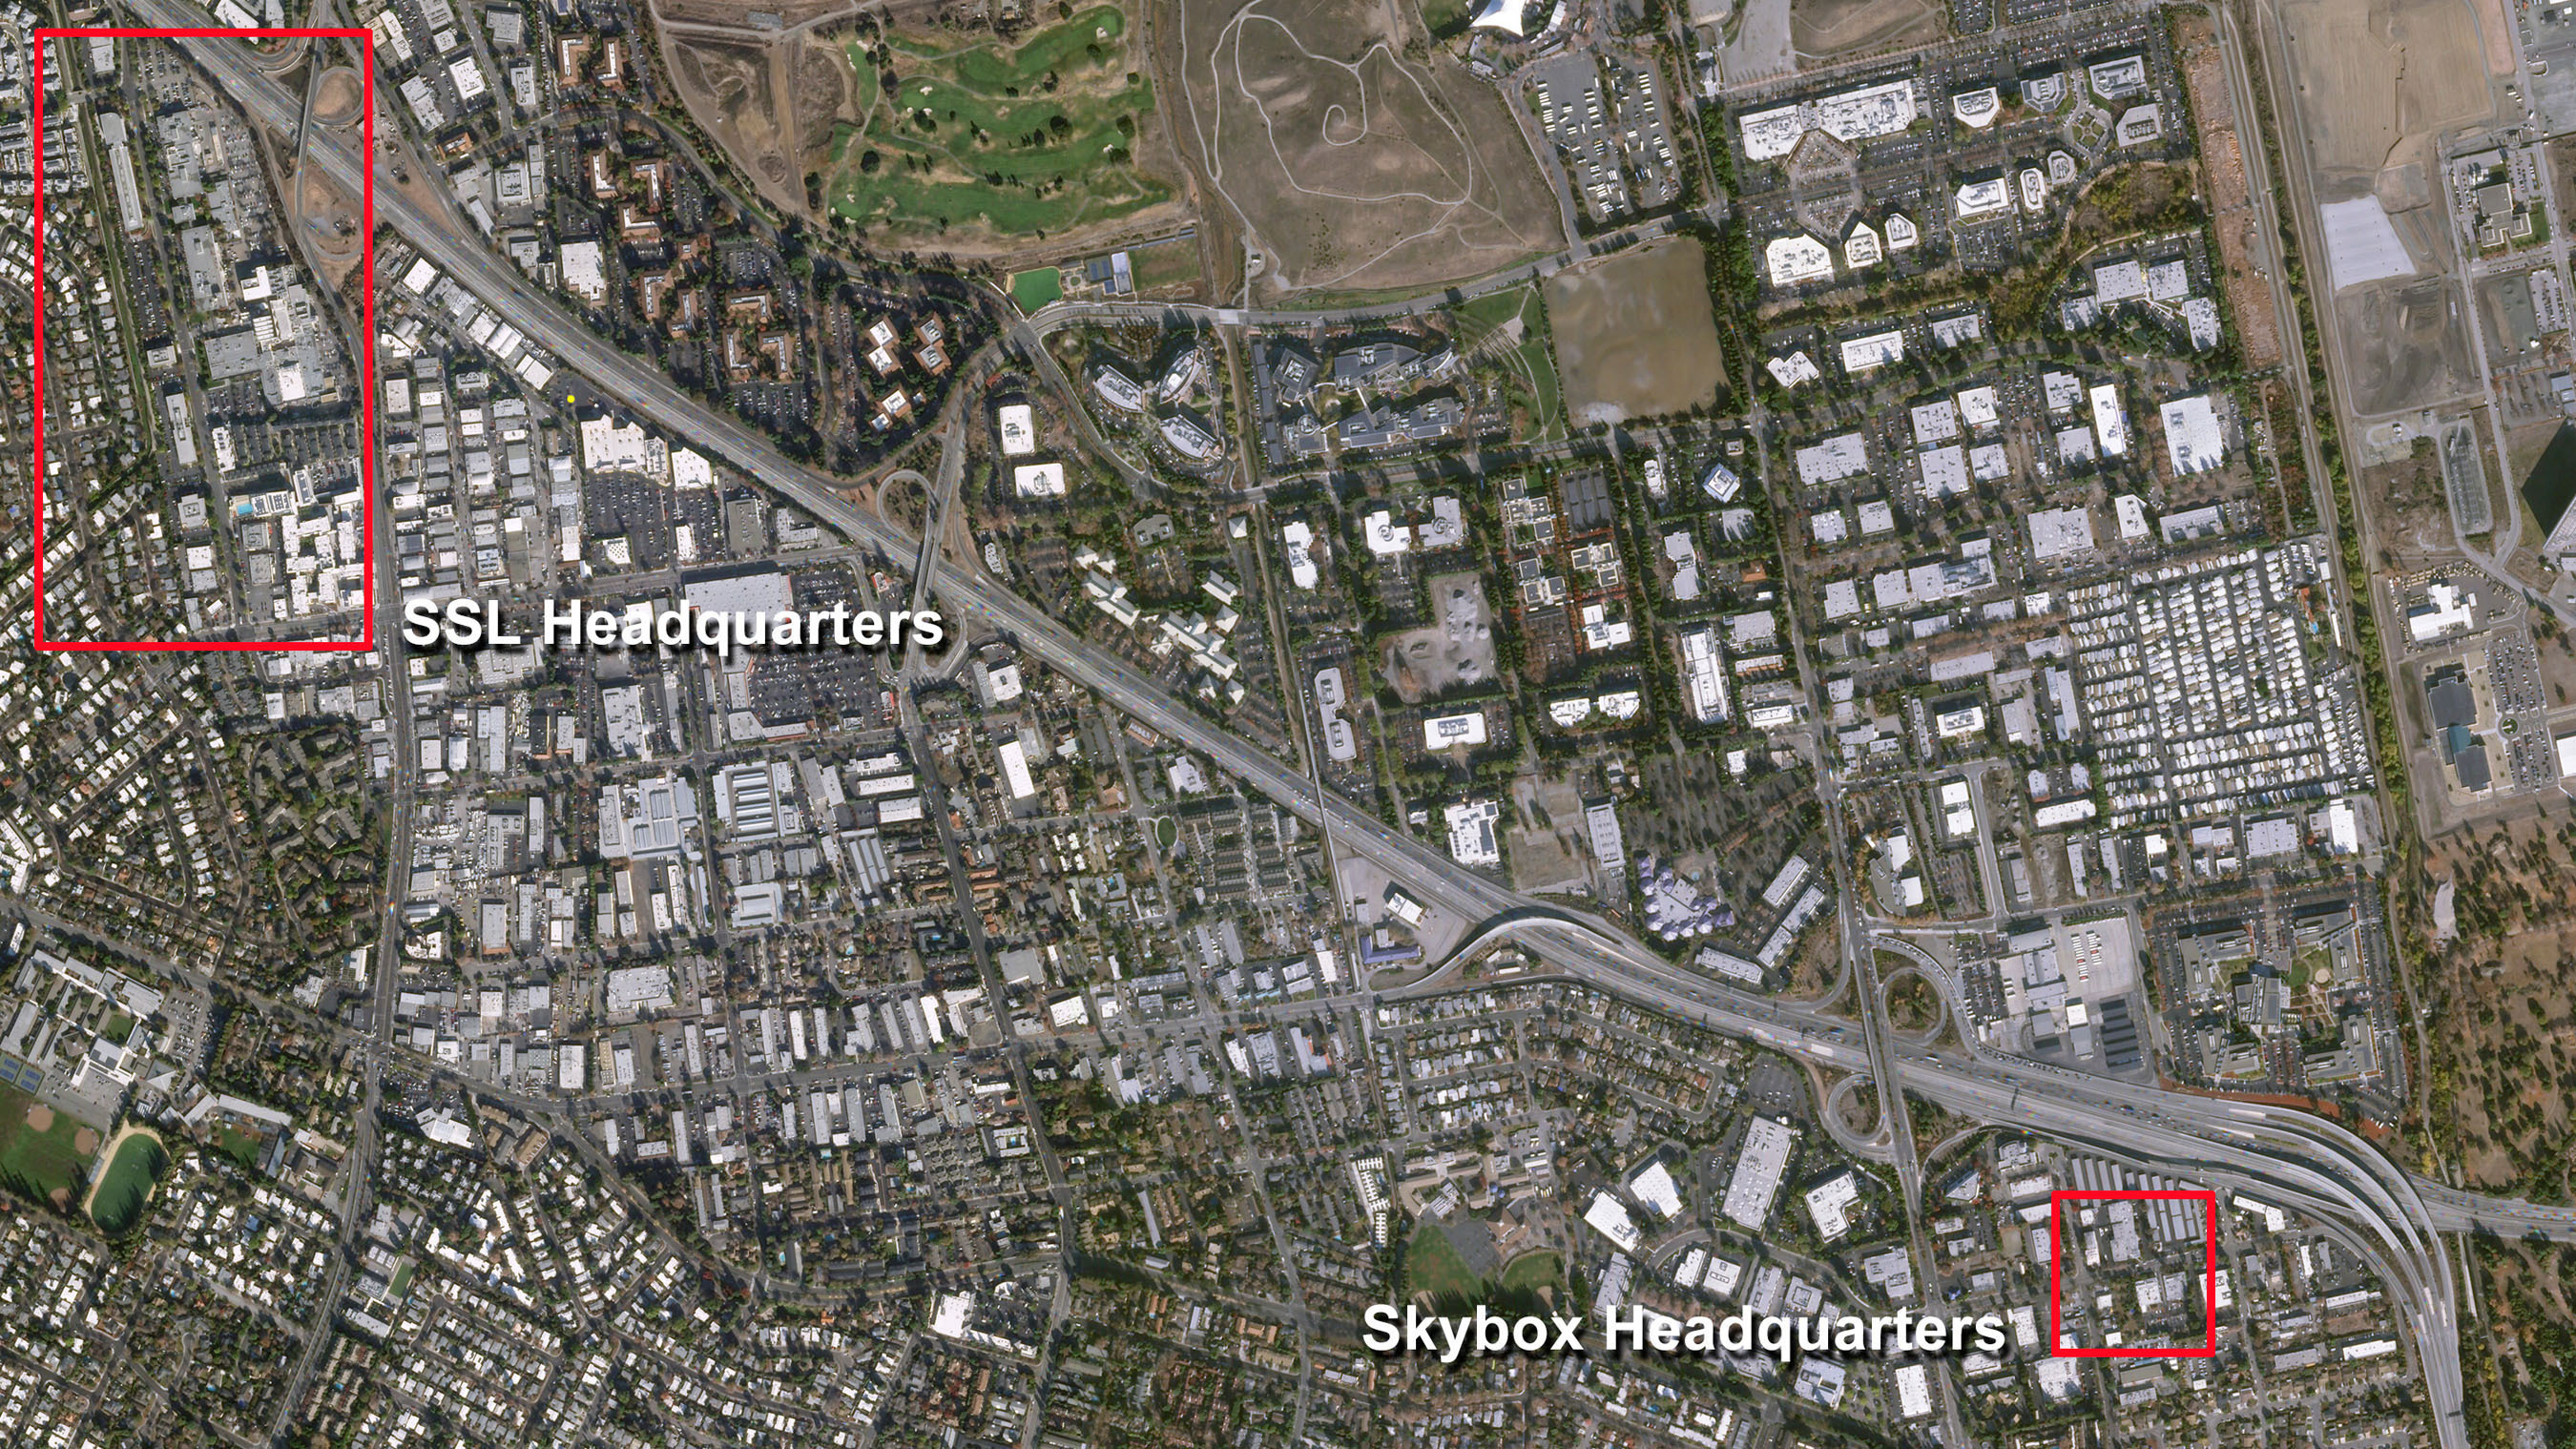 This image was captured by SkySat-1 which shows the SSL and Skybox headquarters. (PRNewsFoto/SSL) (PRNewsFoto/SSL)